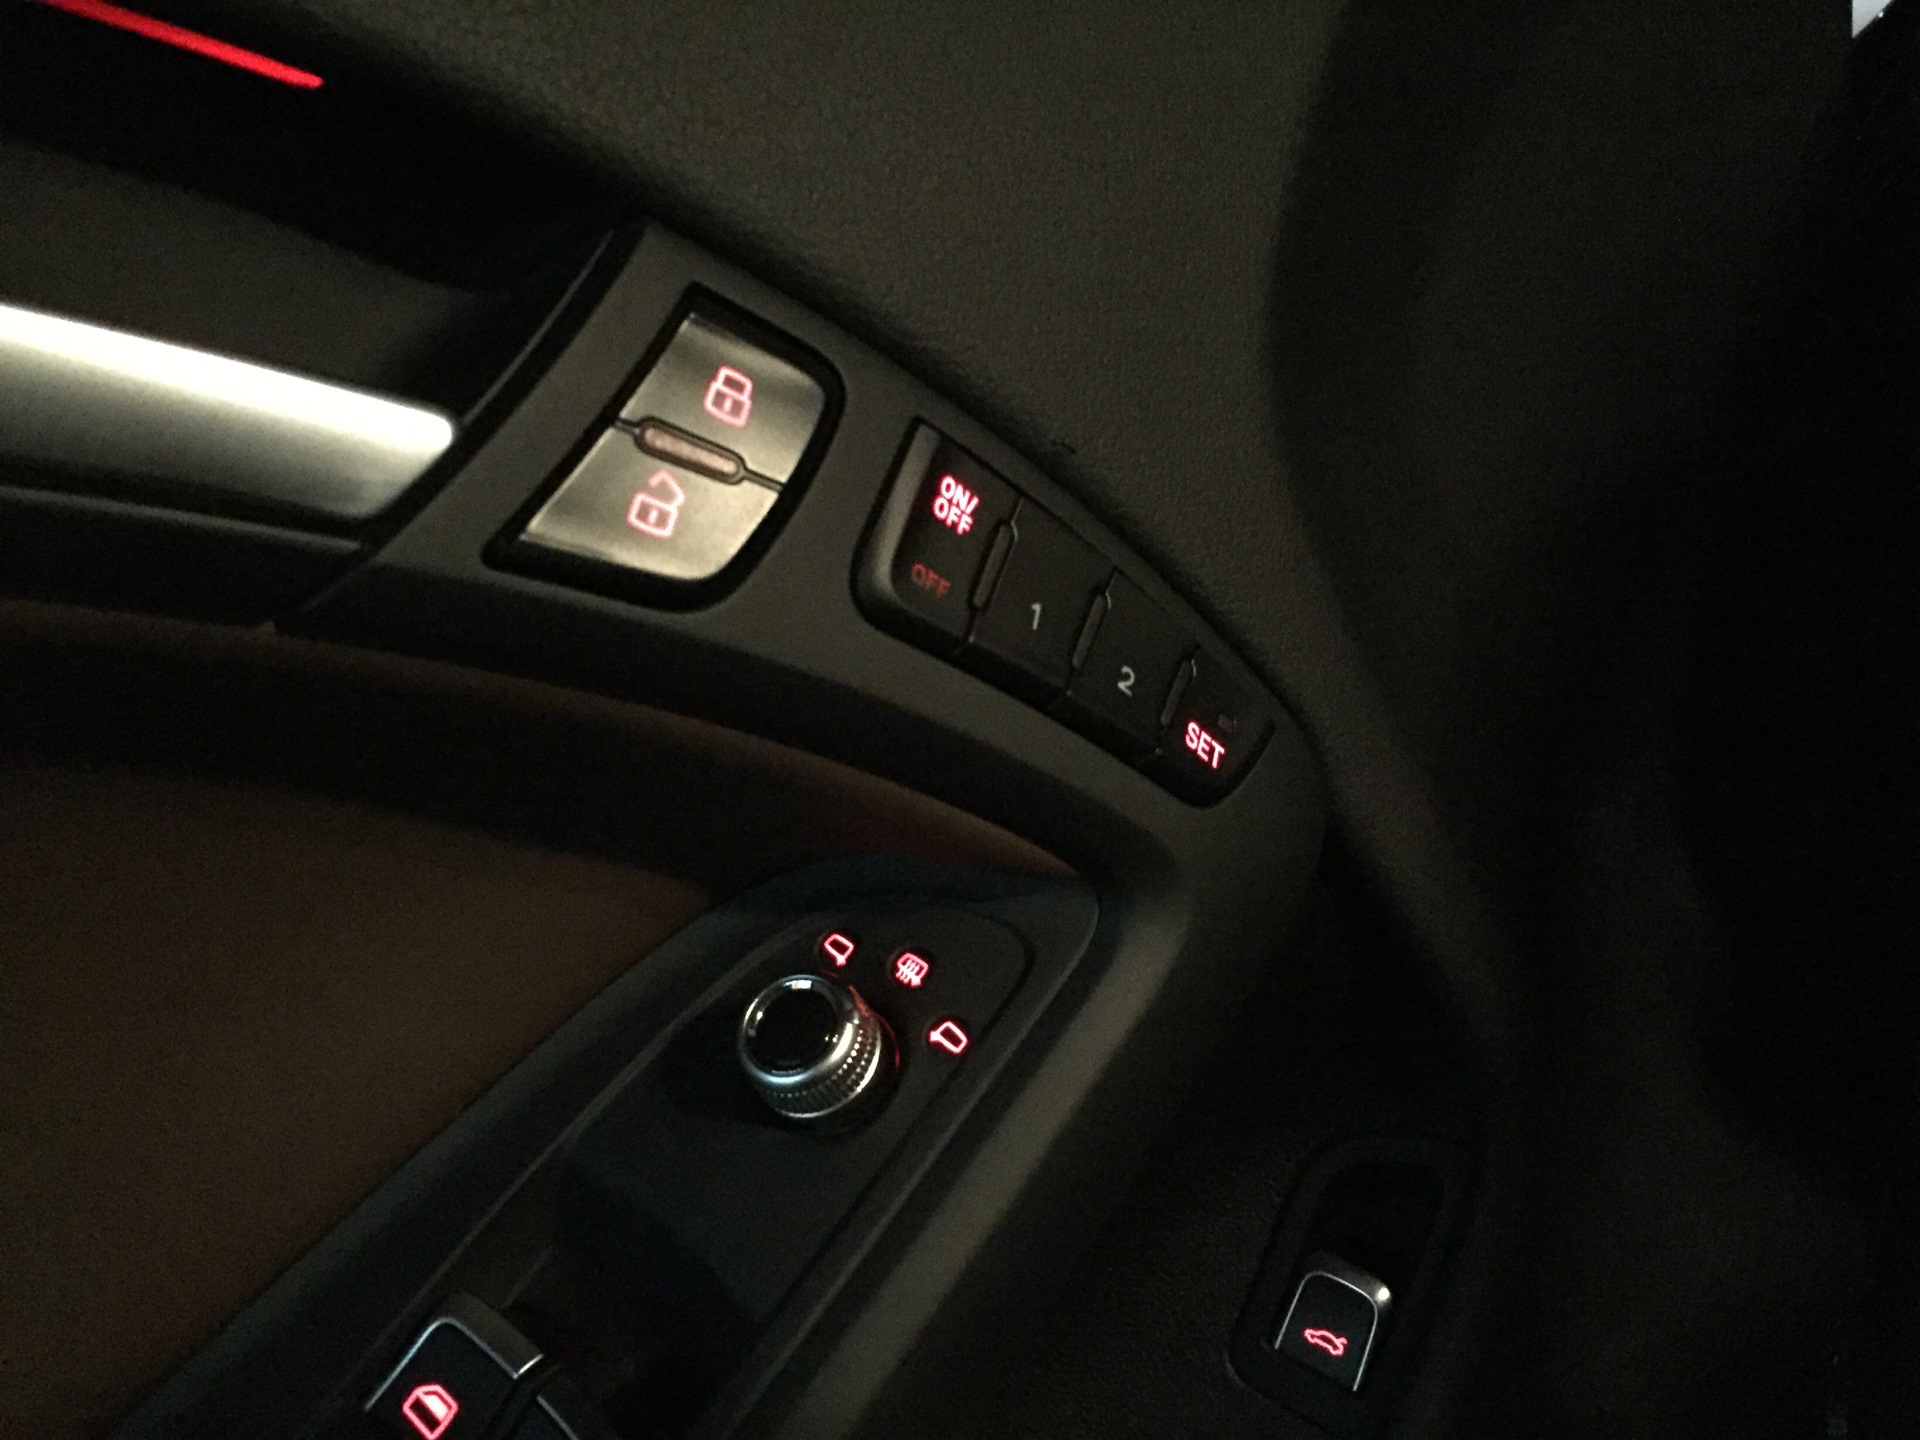 X-Trail память сидений. Подсветка кнопки памяти сидений Тойота венза. Кнопки памяти сидений Citroen c5x7. Kia k3 память сидений.